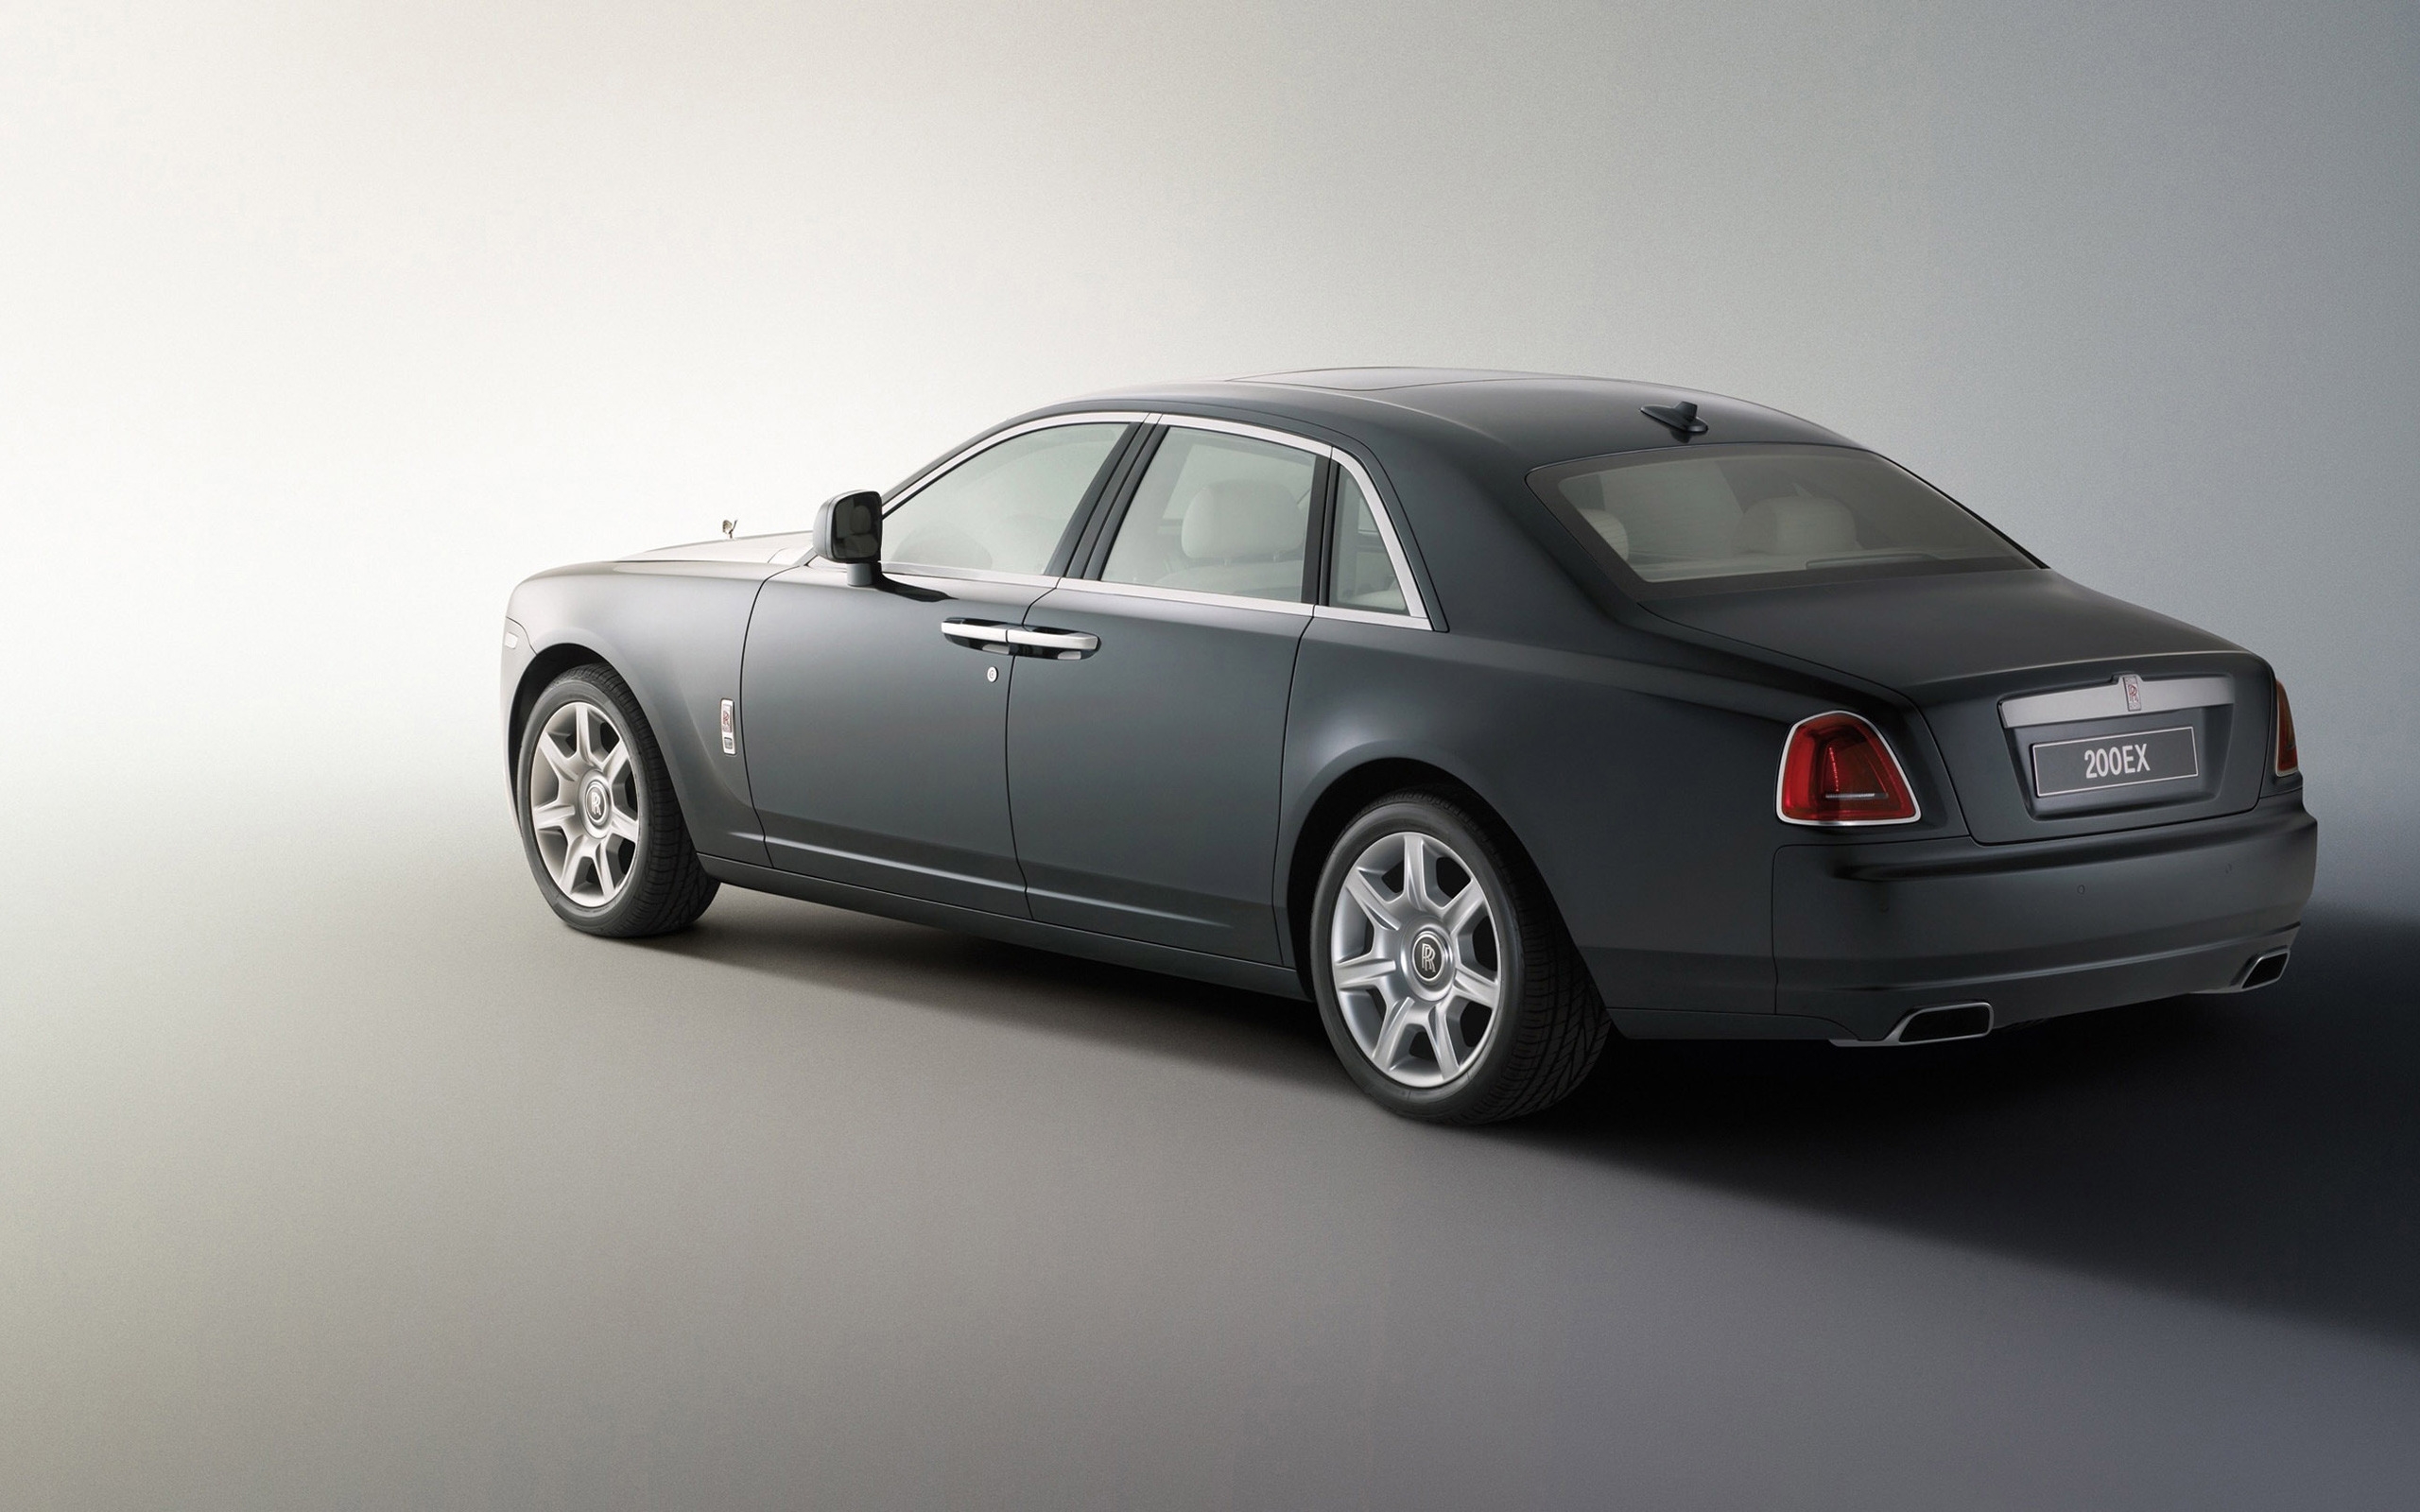 Rolls Royce 200EX for 2560 x 1600 widescreen resolution